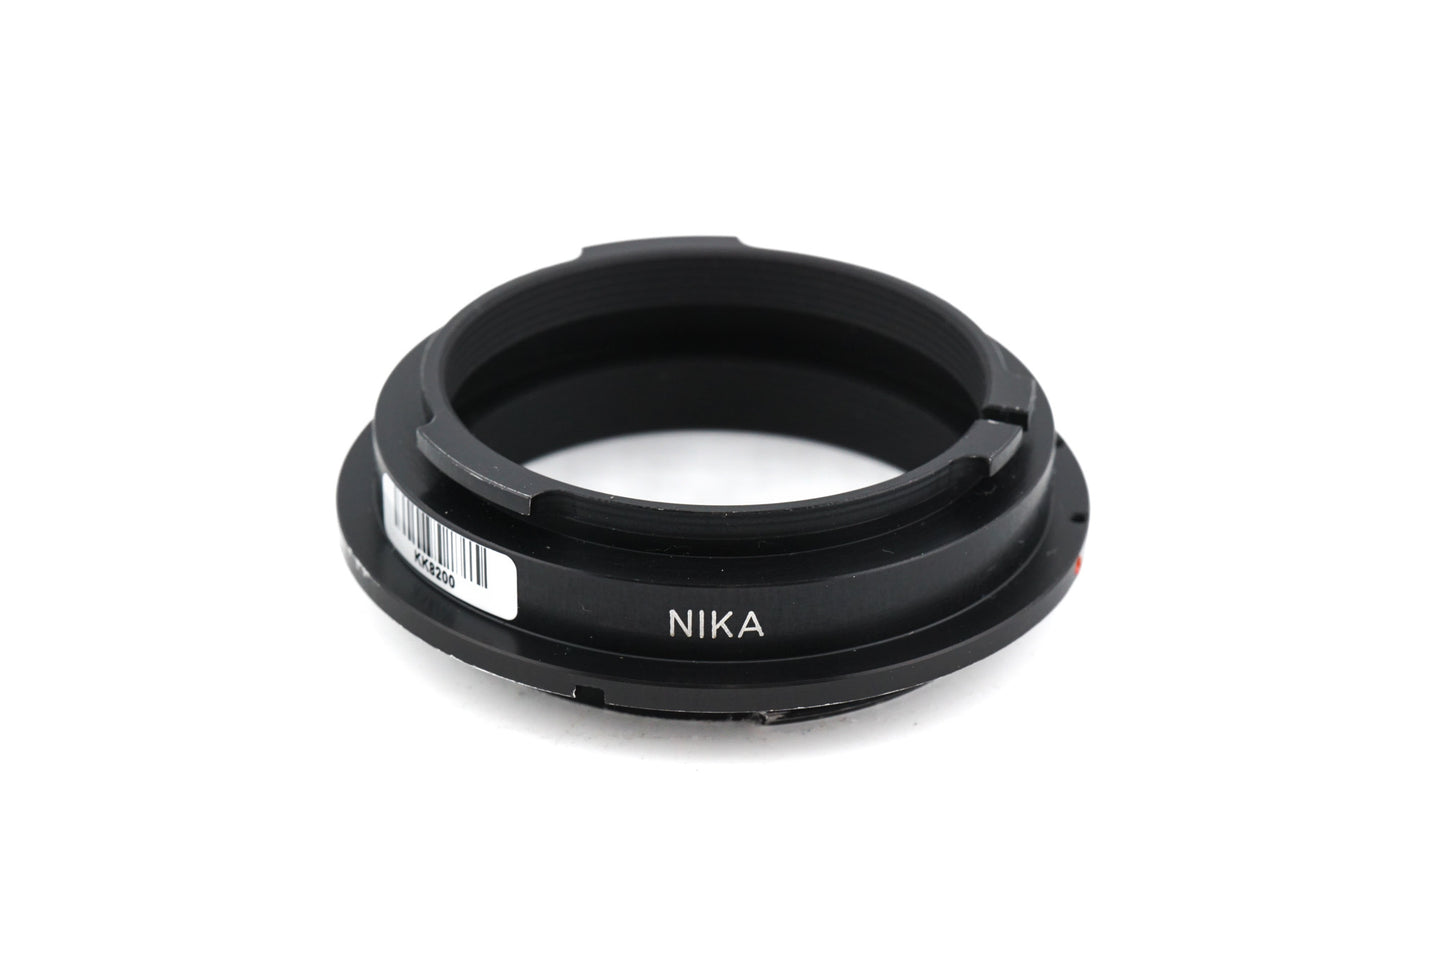 Novoflex Nikon F - Novoflex Universal Bellows (NIKA) Adapter